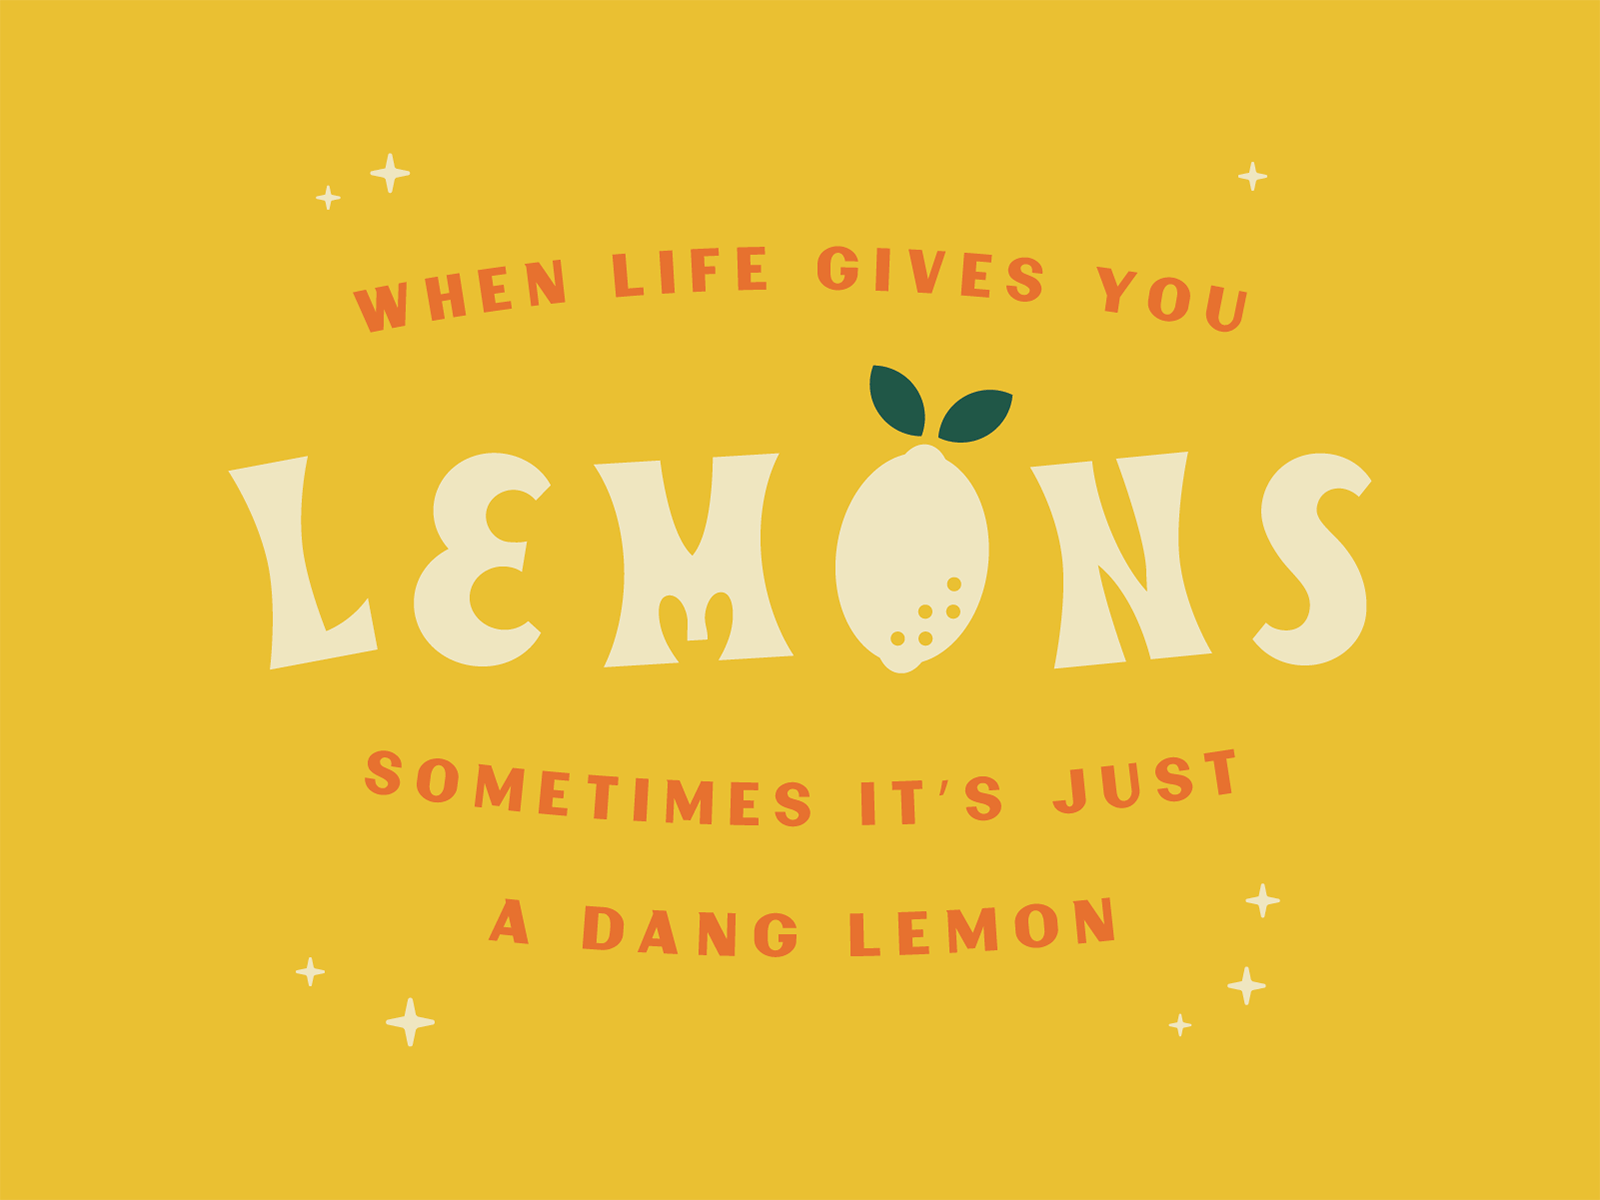 A Dang Lemon.